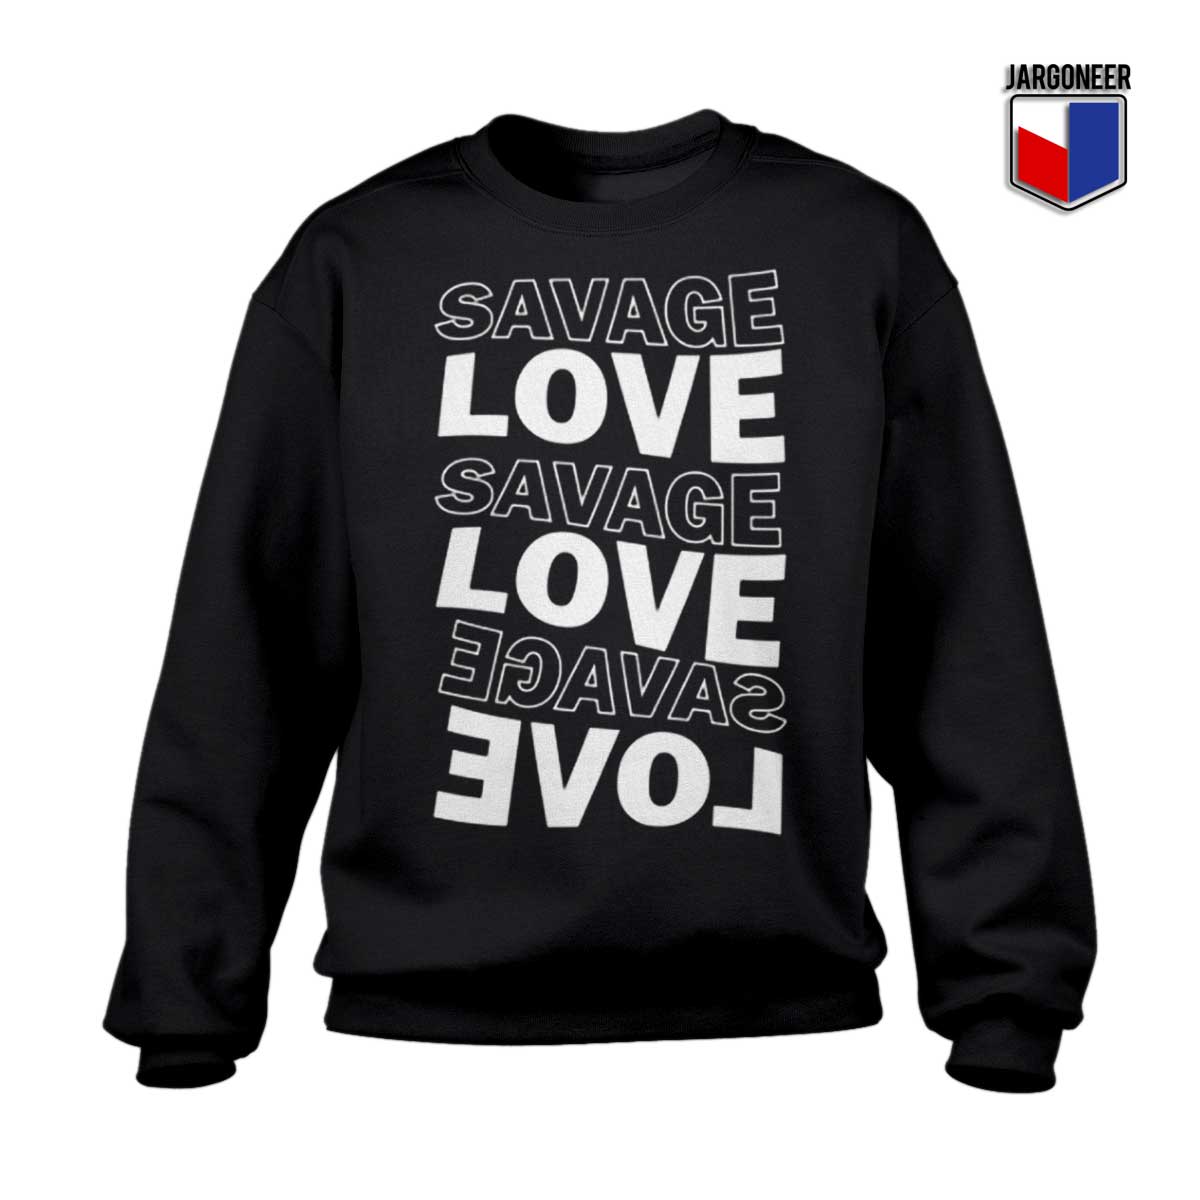 Savage Love Music Sweatshirt - Shop Unique Graphic Cool Shirt Designs